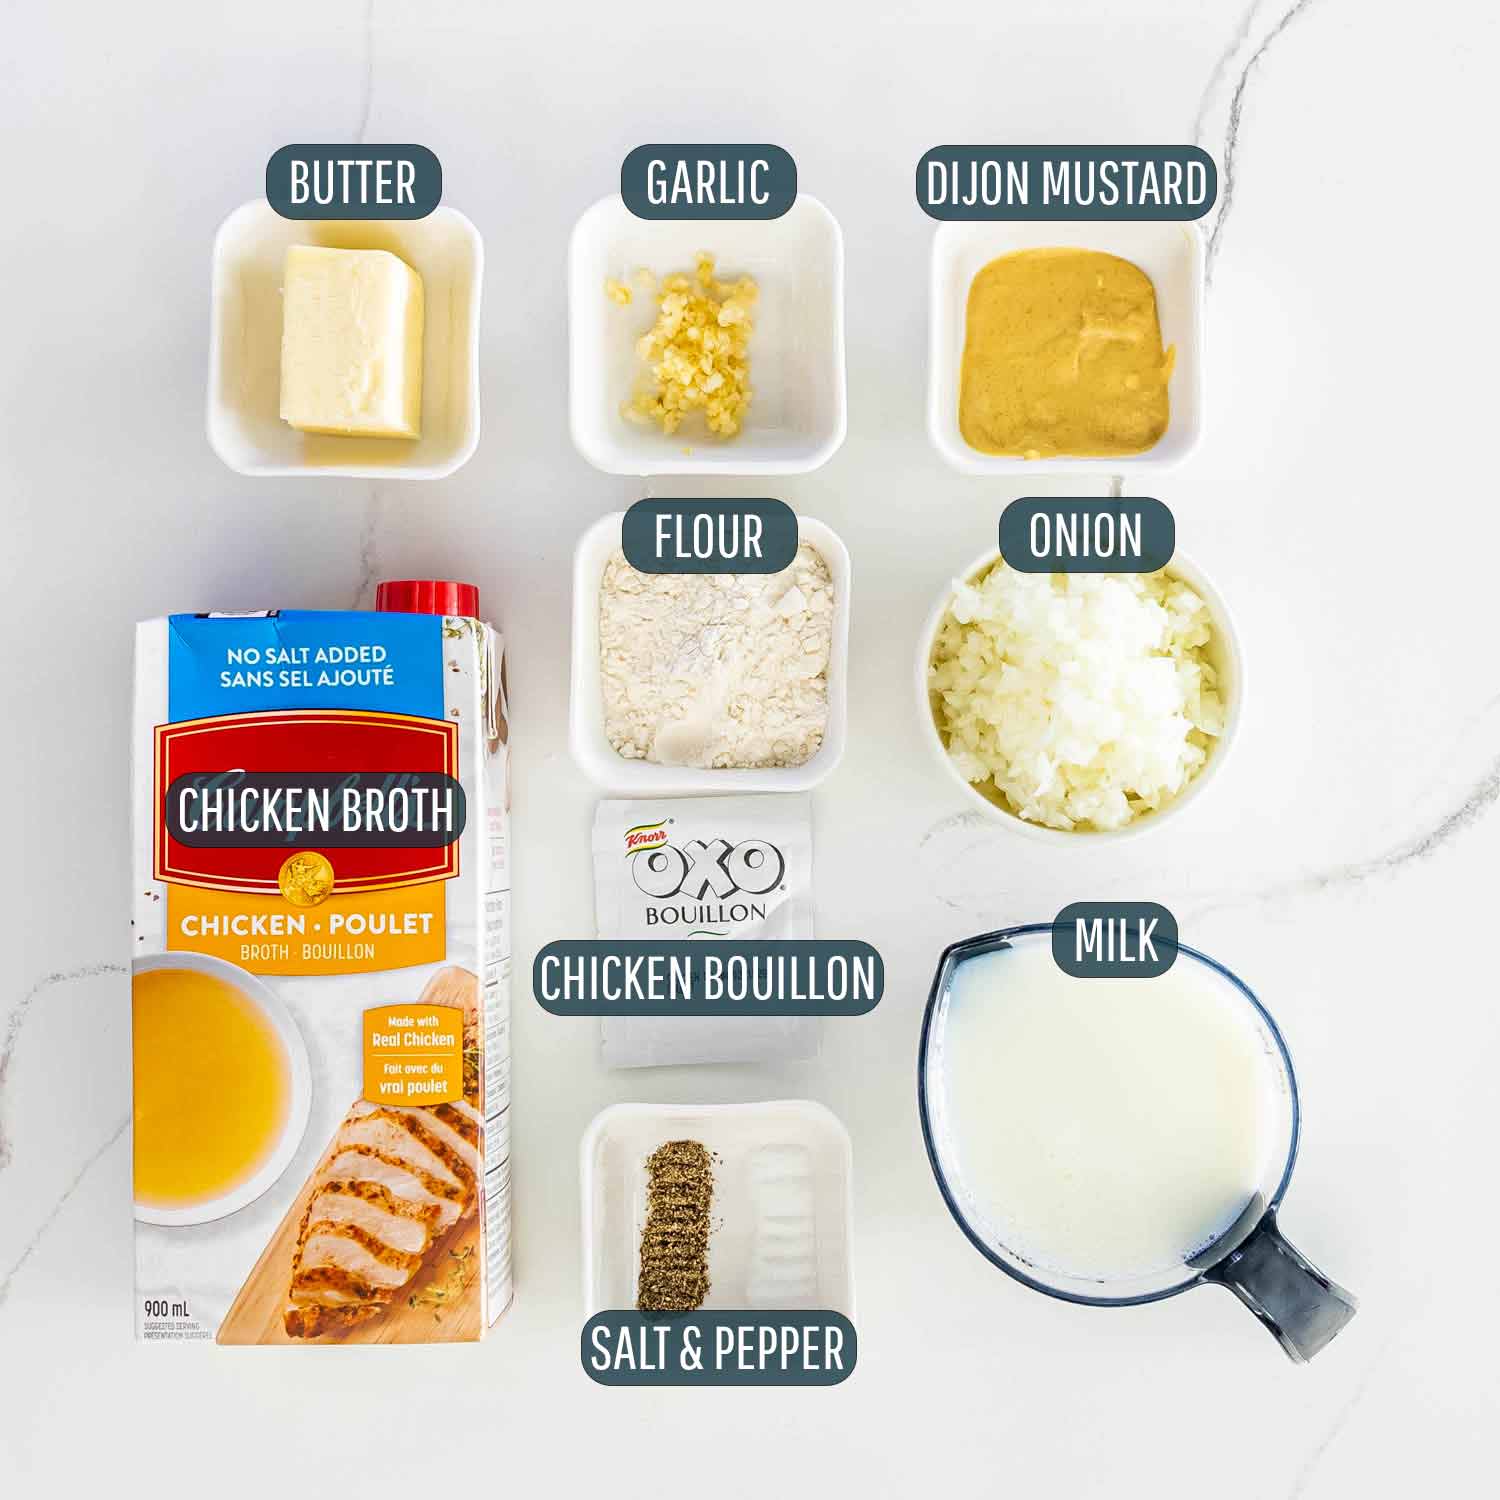 ingredients needed to make cheese sauce for chicken cordon bleu casserole.